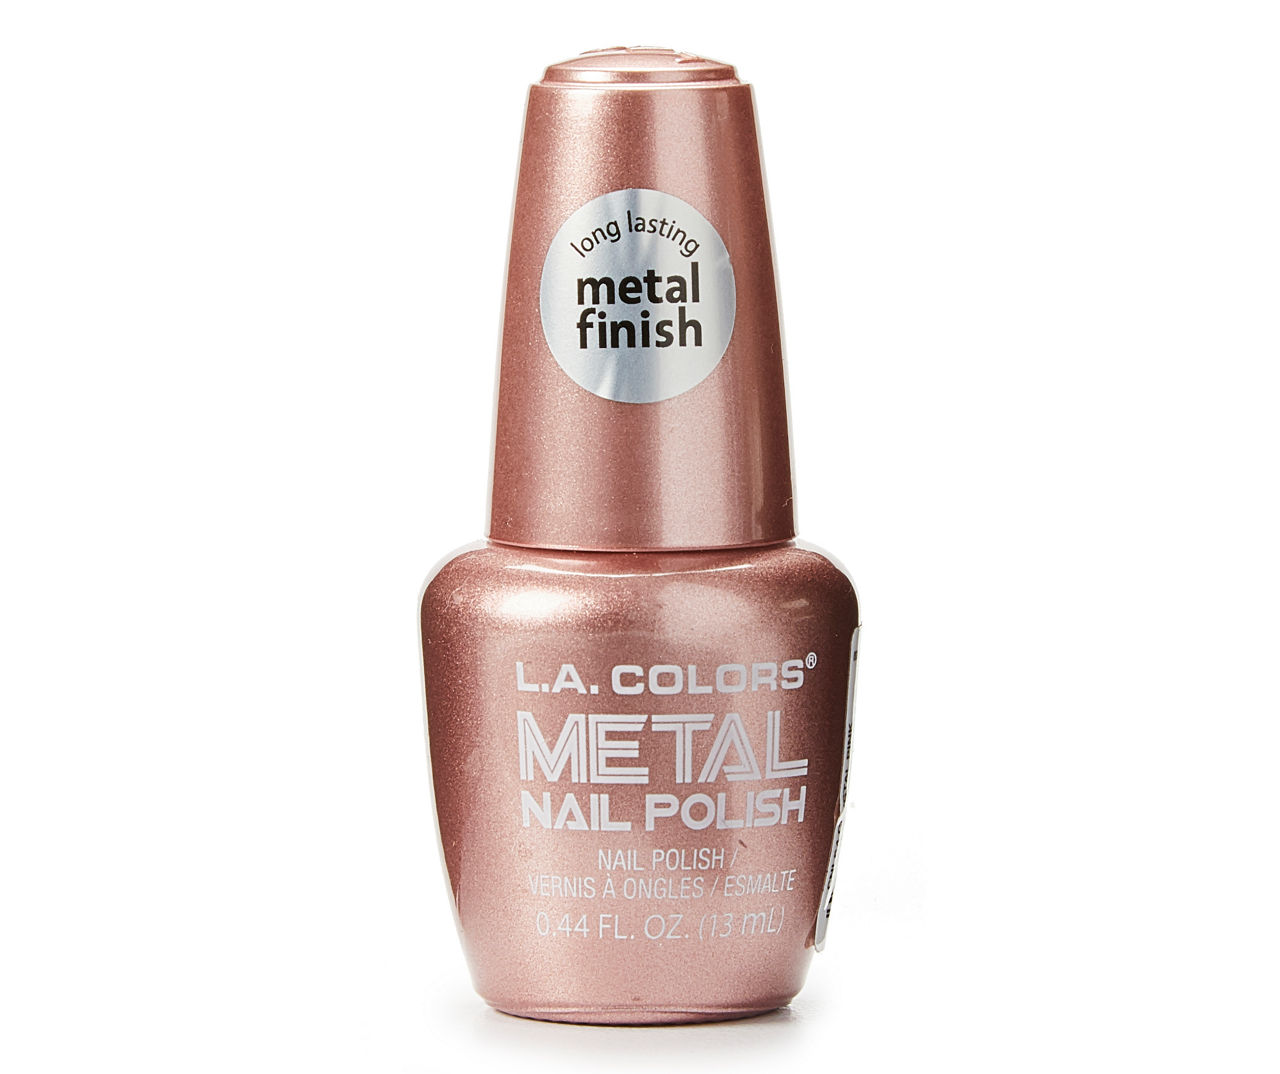 Metal Nail Polish in Crystal Pink, 0.44 Oz.